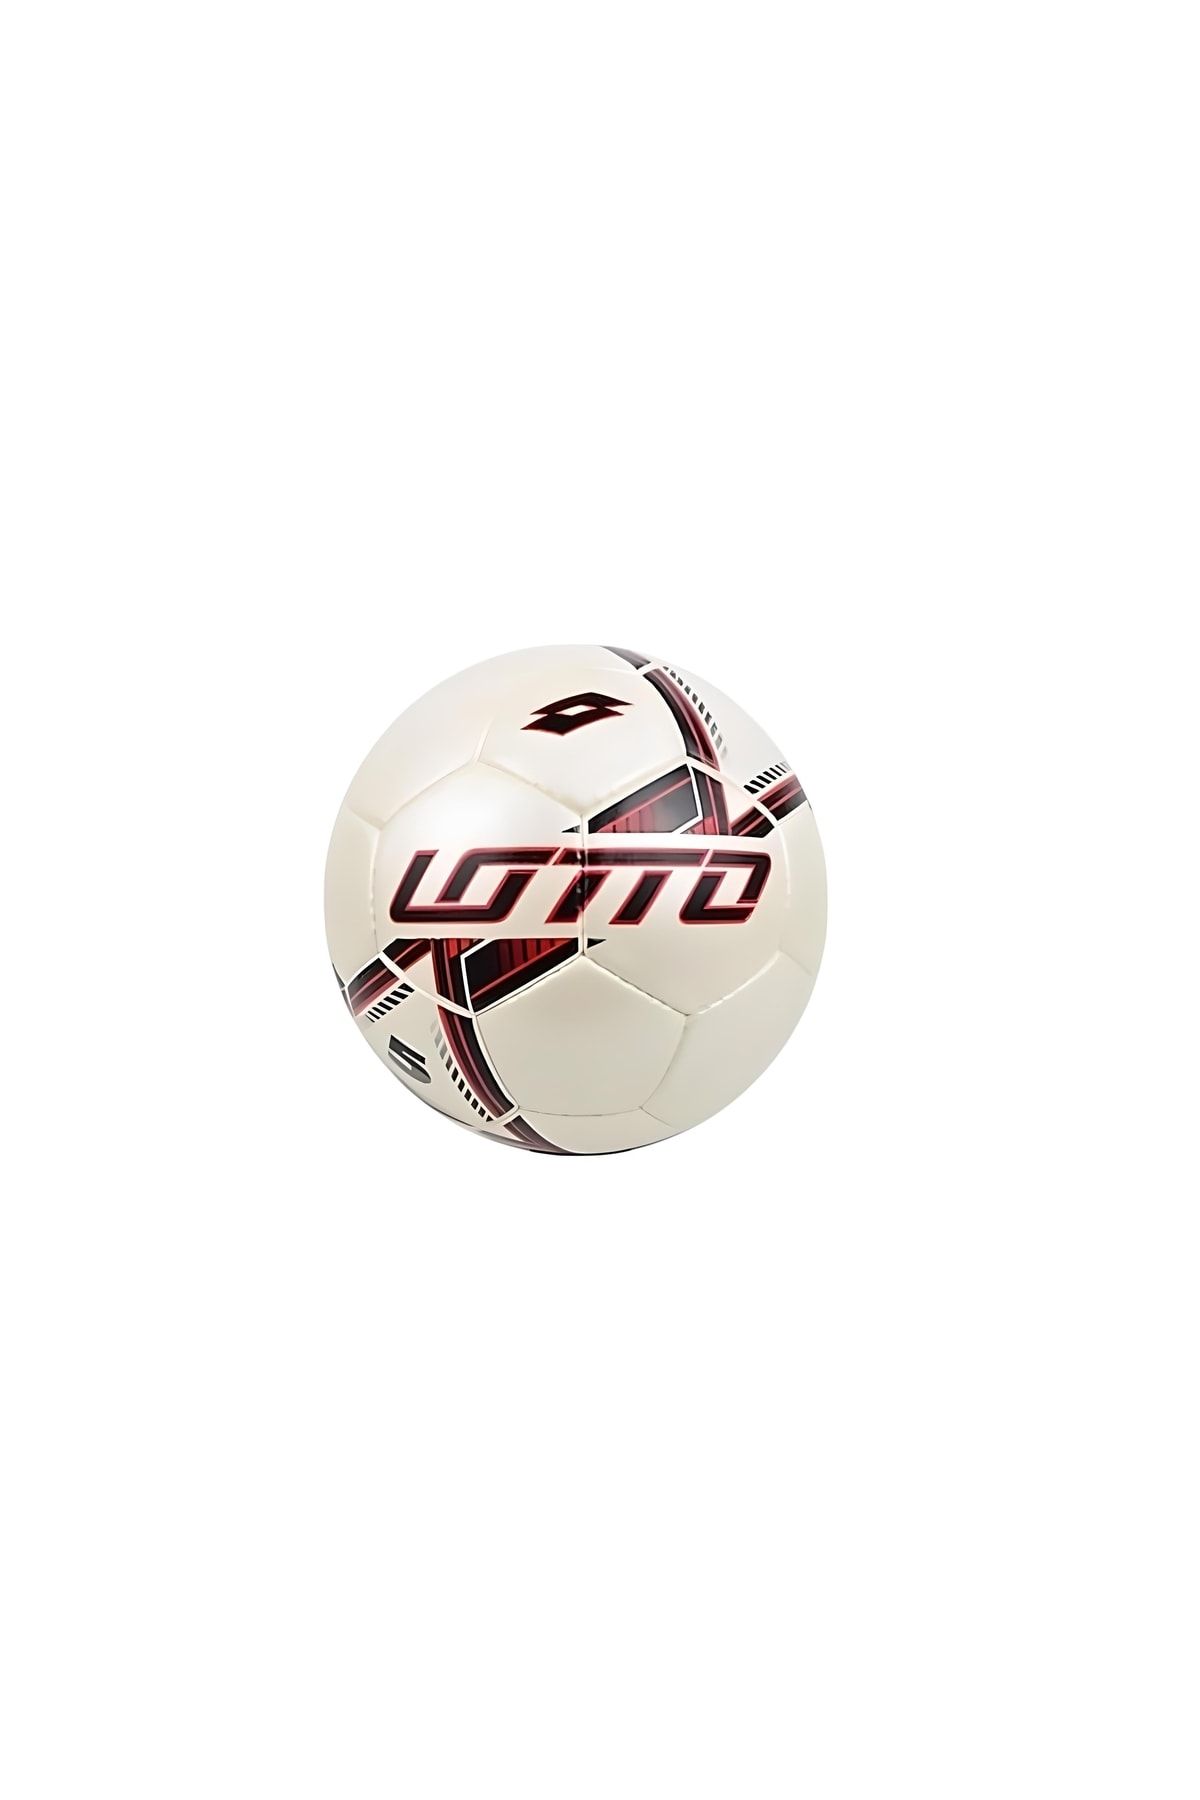 Lotto Raul Pro 5 Numara Futbol Topu N6689